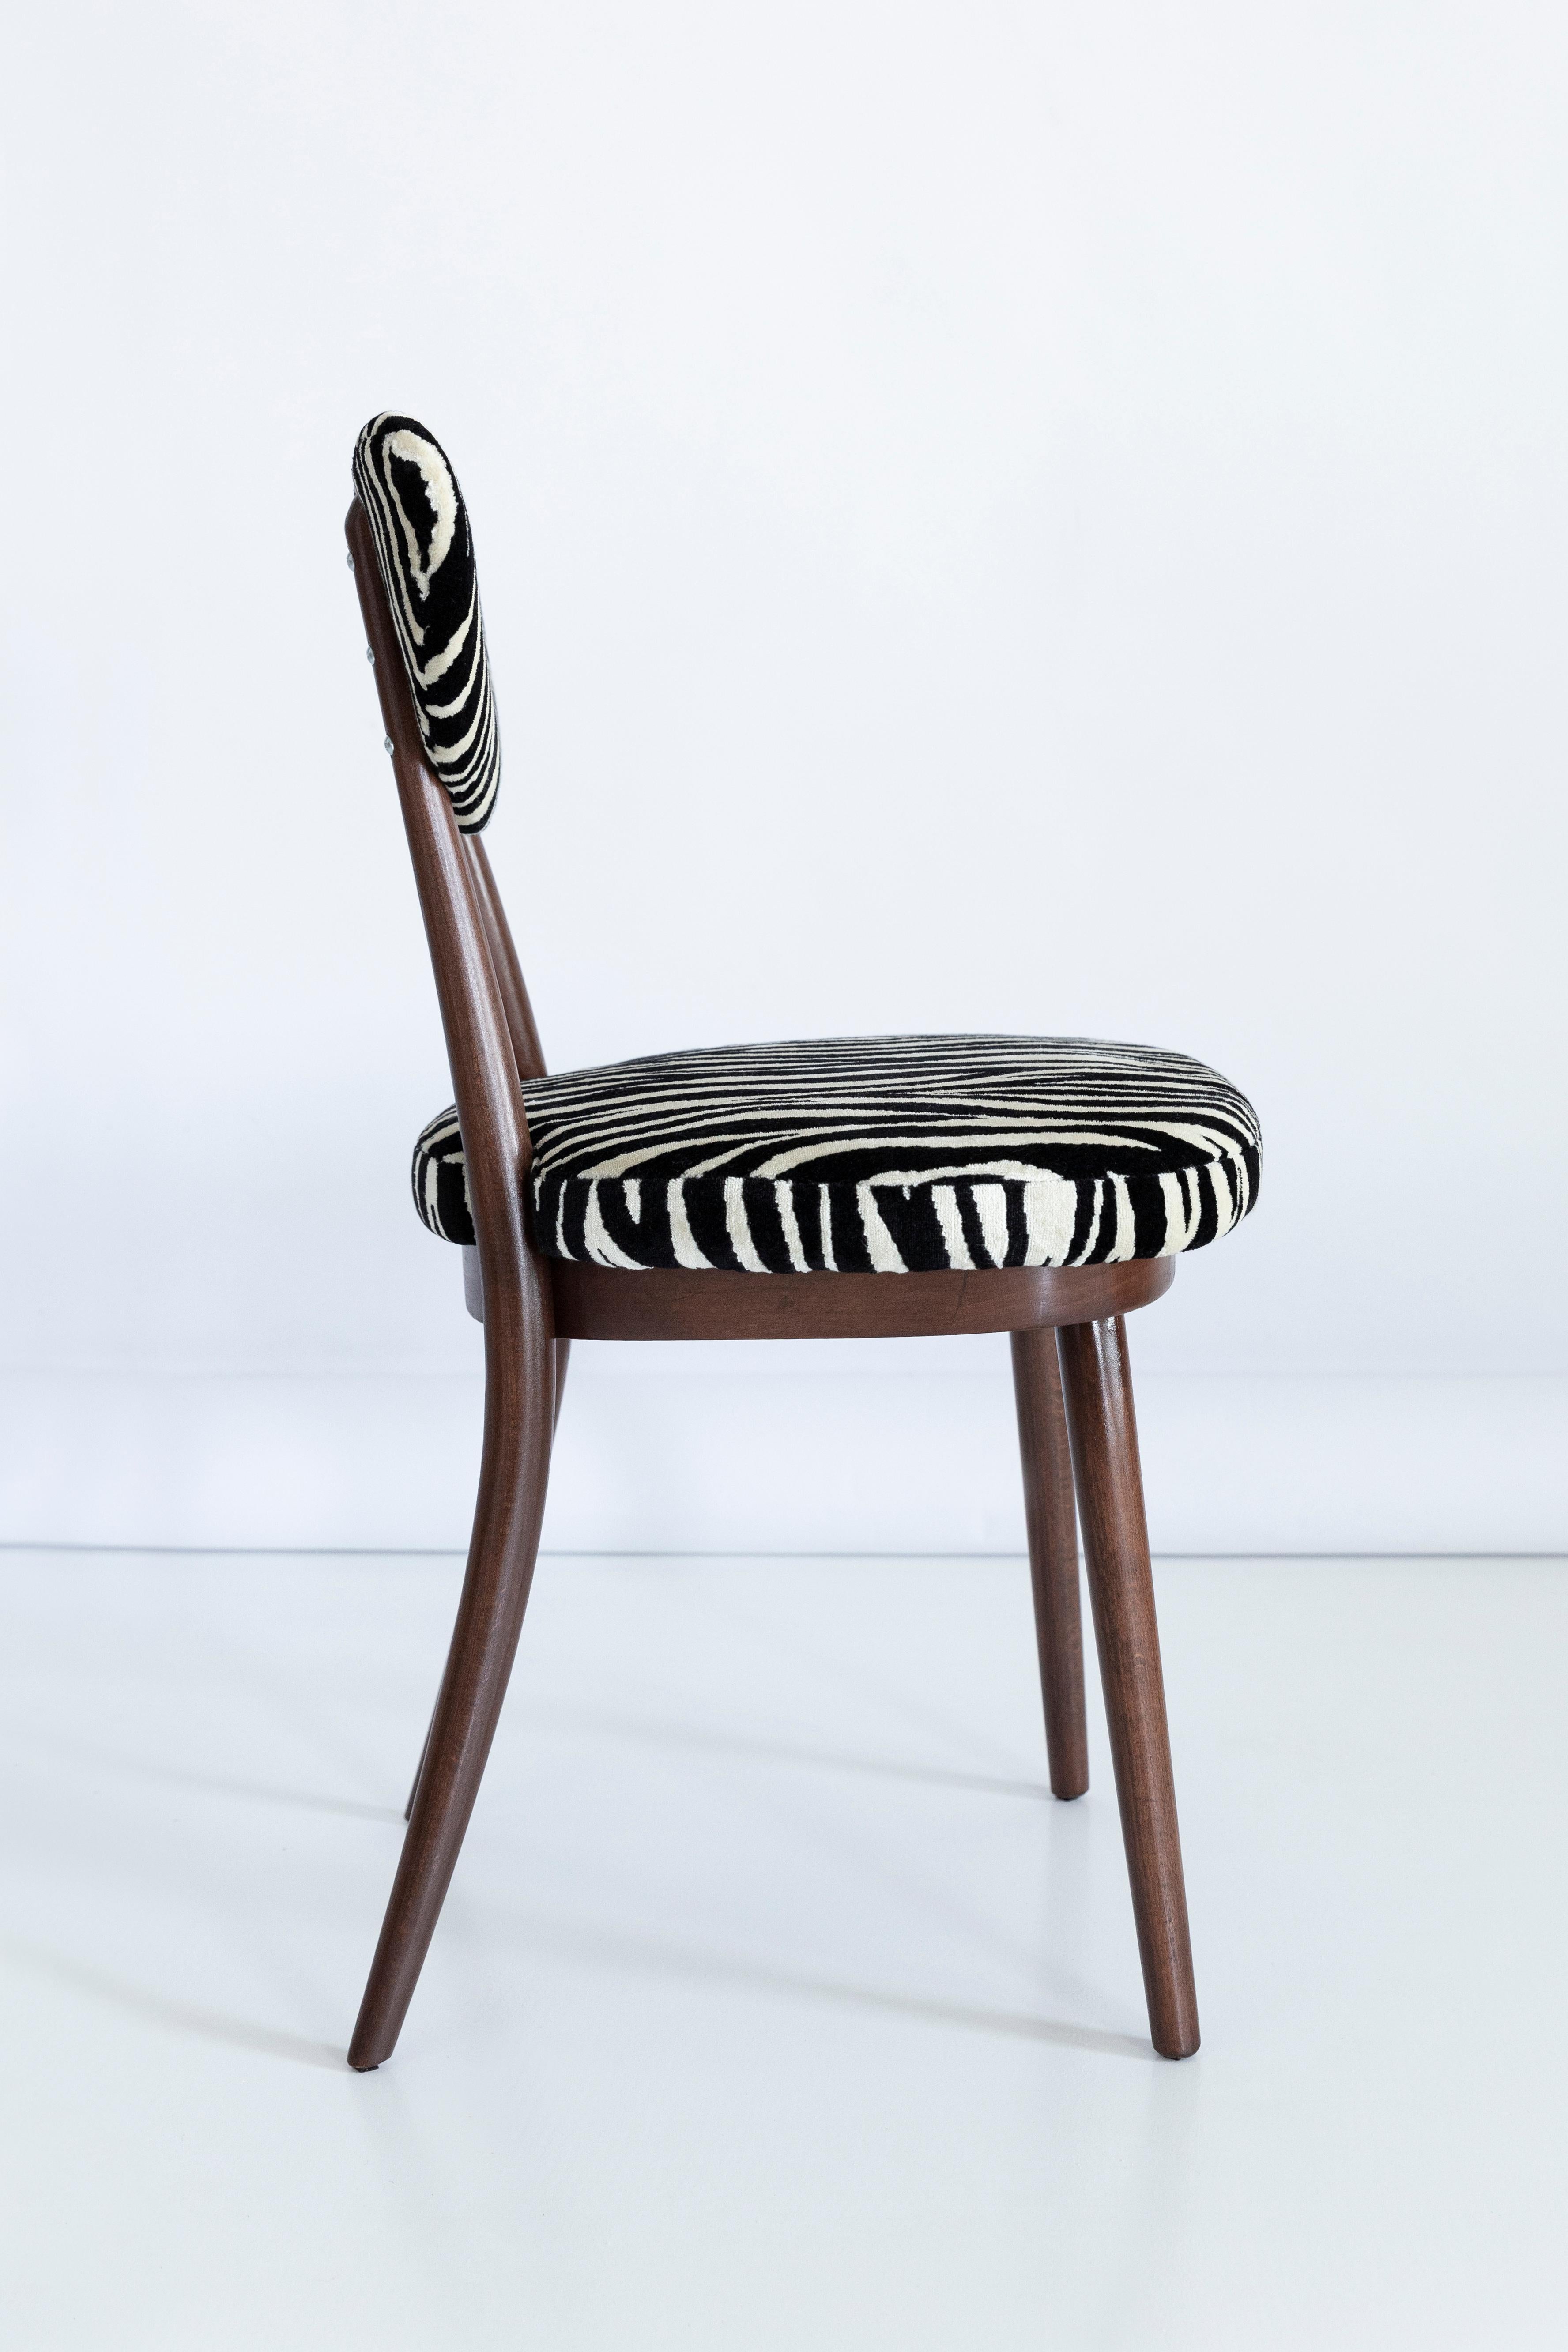 Six Midcentury Zebra Black White Heart Chairs, Hollywood Regency, Poland, 1960s For Sale 9